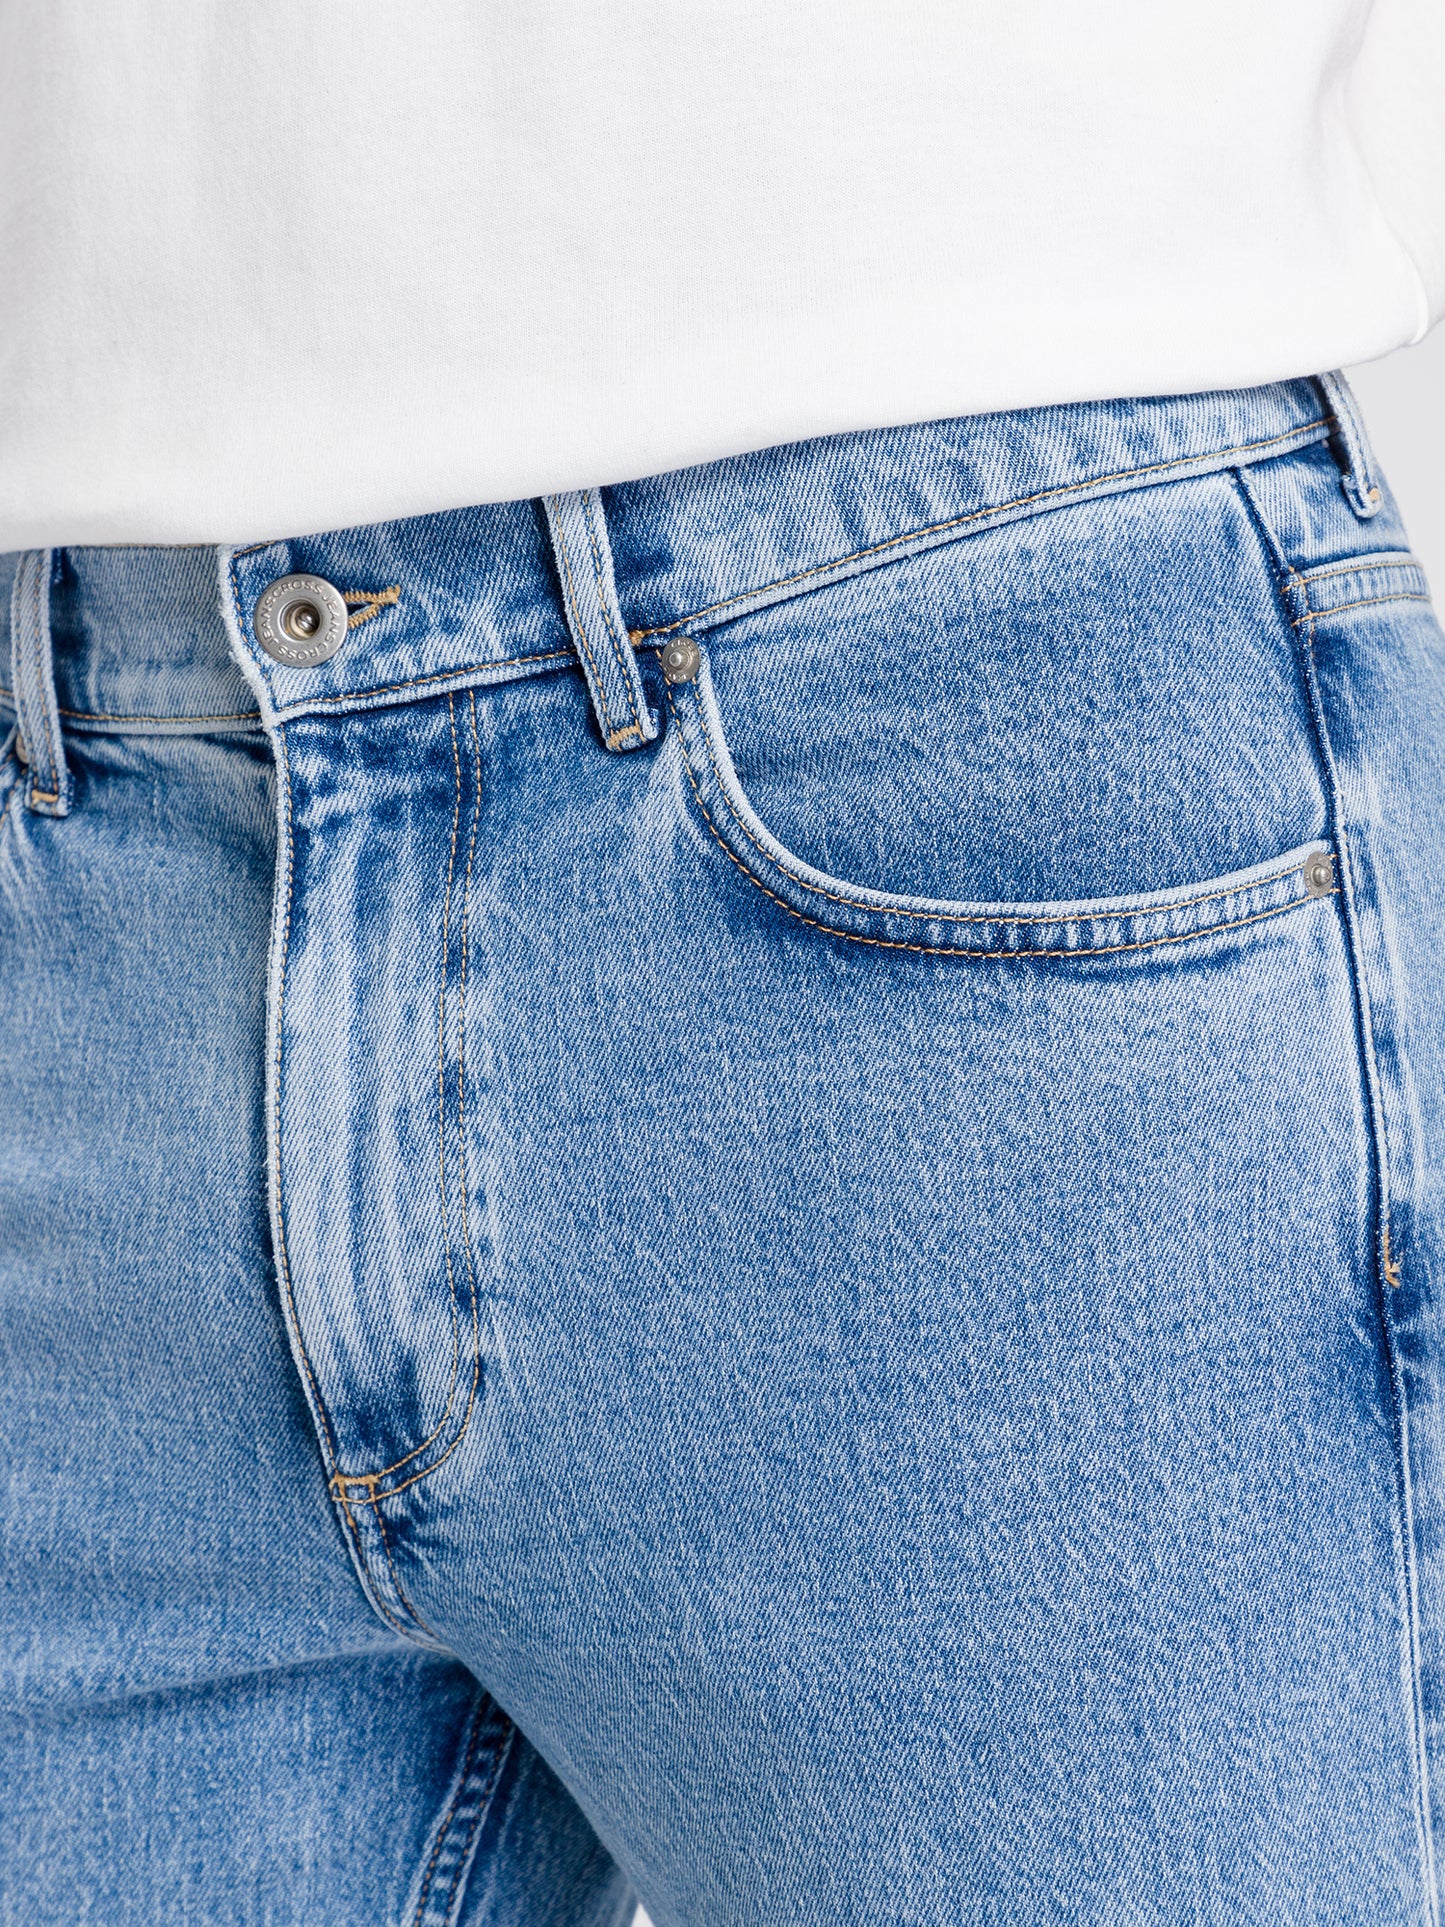 Fınn Herren Jeans Regular Fit Tapered Leg hellblau